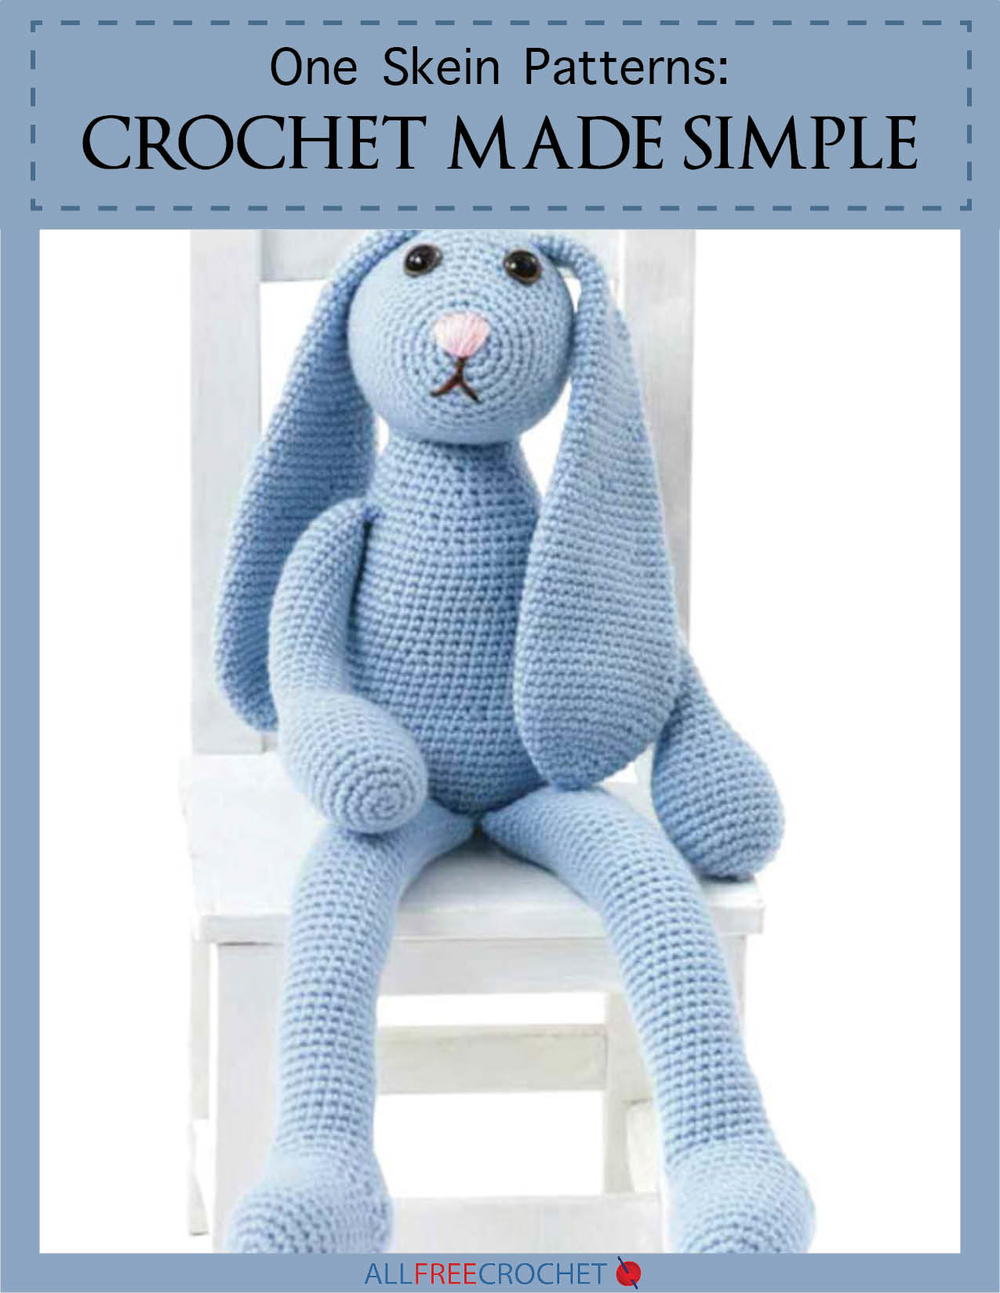 One Skein Patterns: Crochet Made Simple | AllFreeCrochet.com